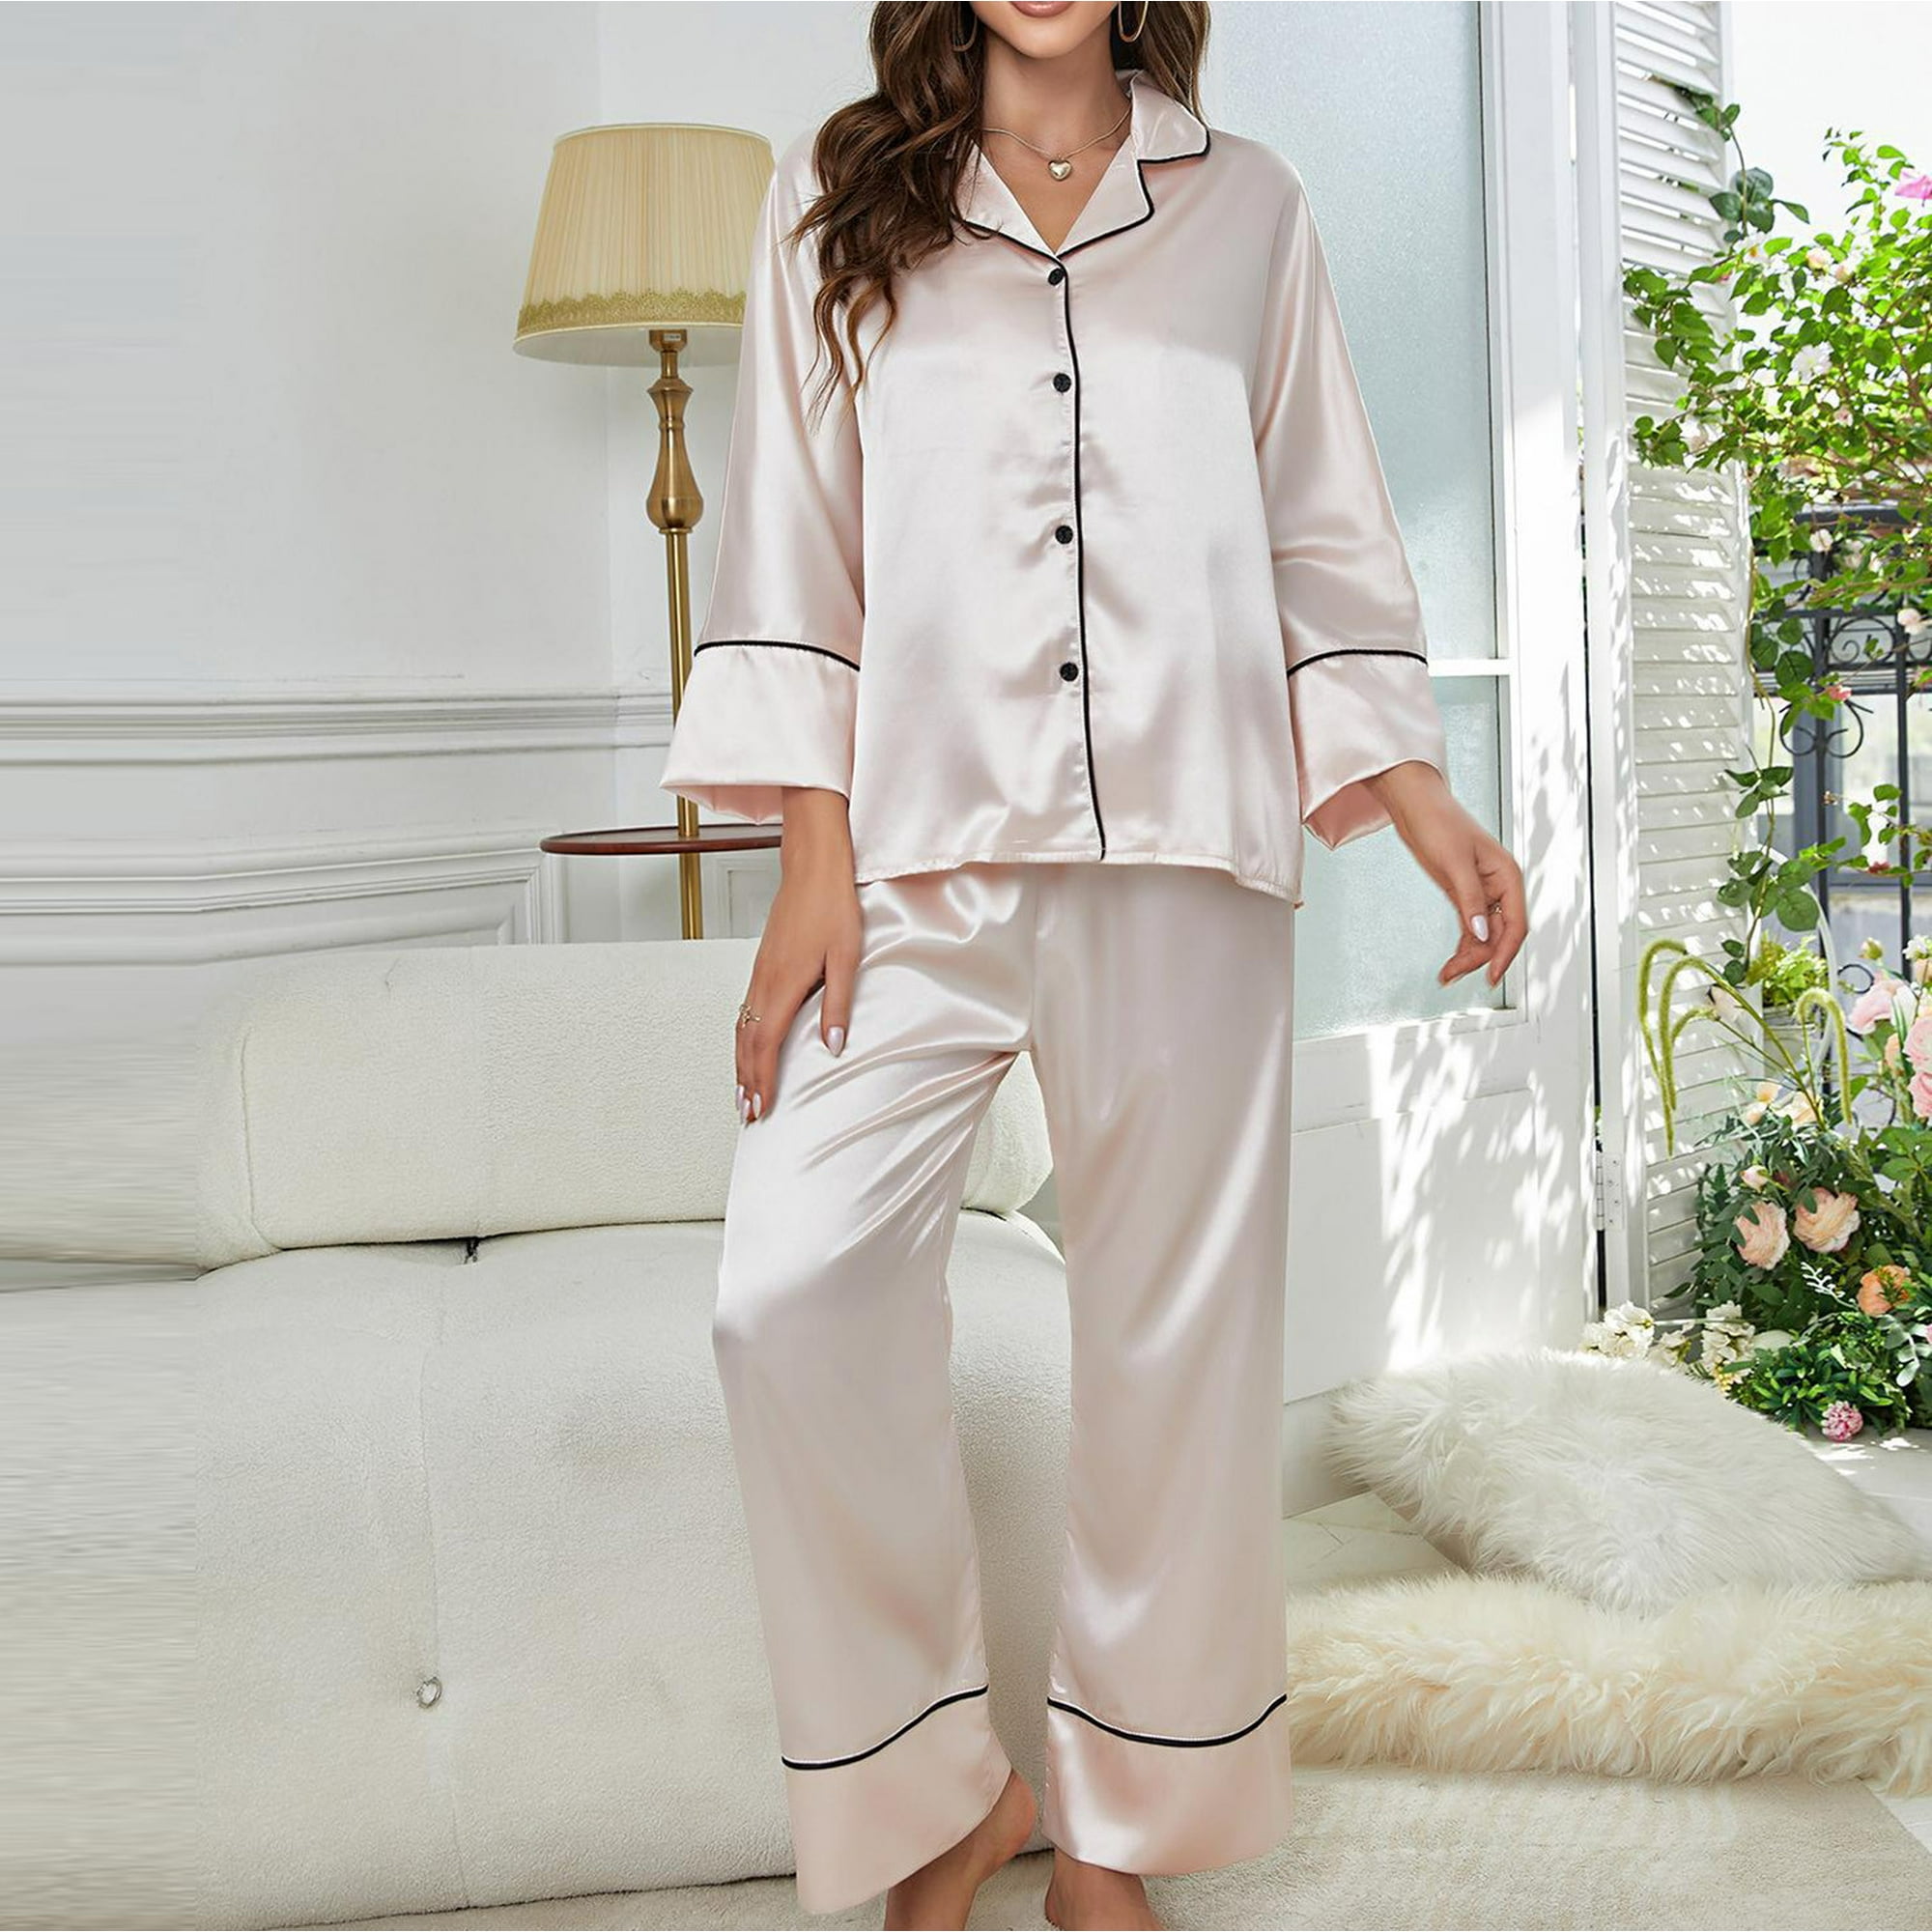 Lingerie for Women's Single-breasted Pajamas Winter Long Pajama Pants Homewear Set | Walmart Canada